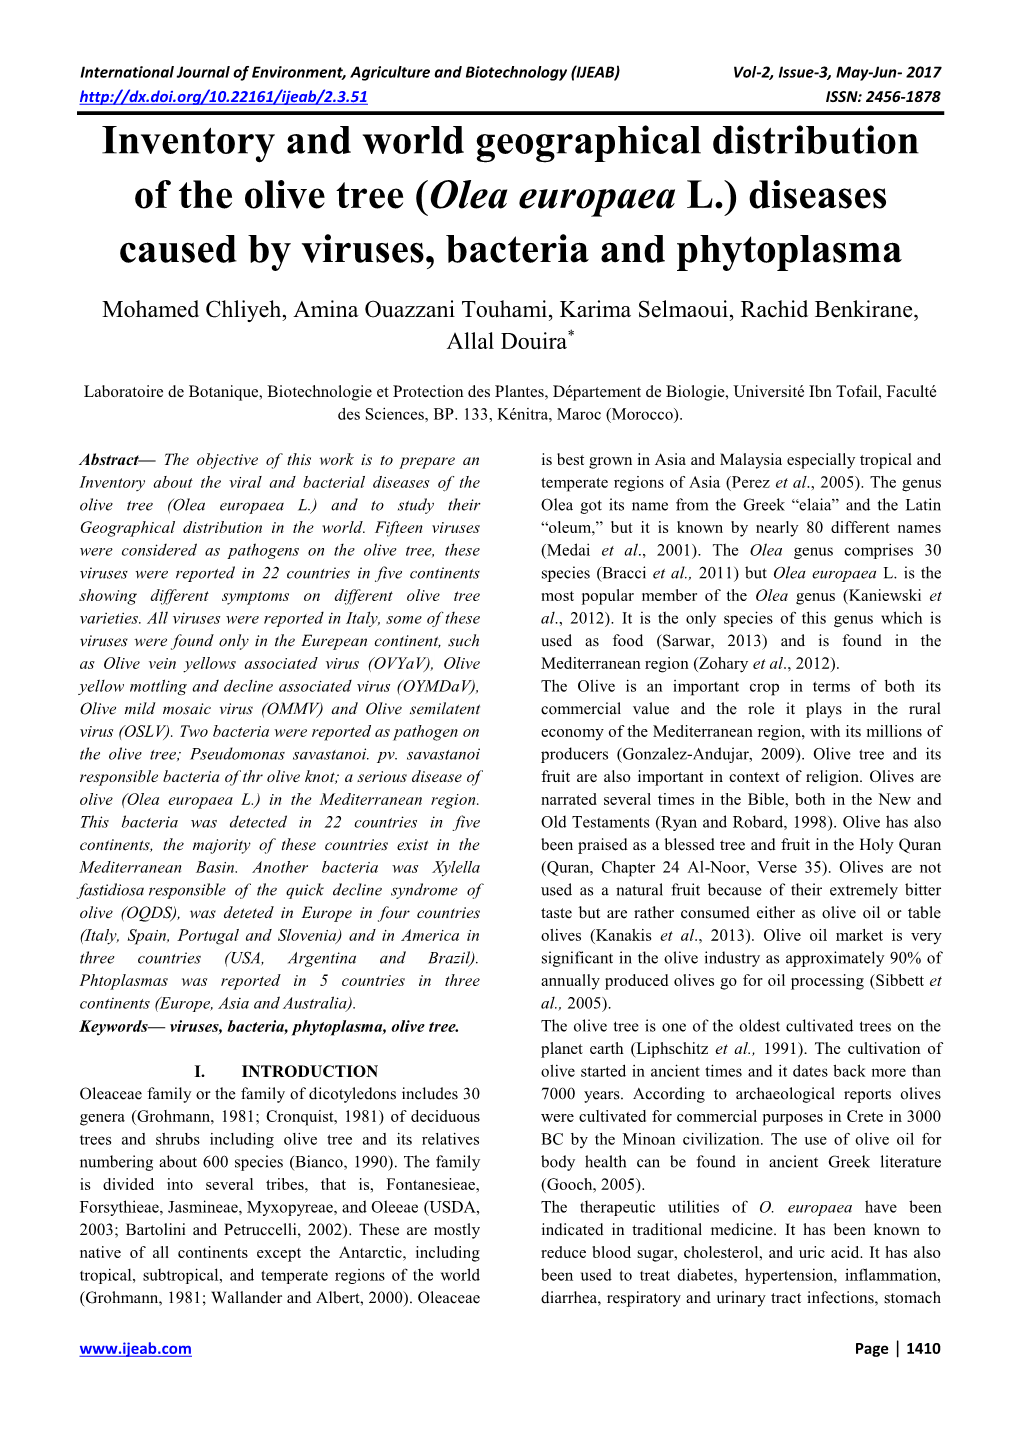 (Olea Europaea L.) Diseases Caused by Viruses, Bacteria and Phytoplasma